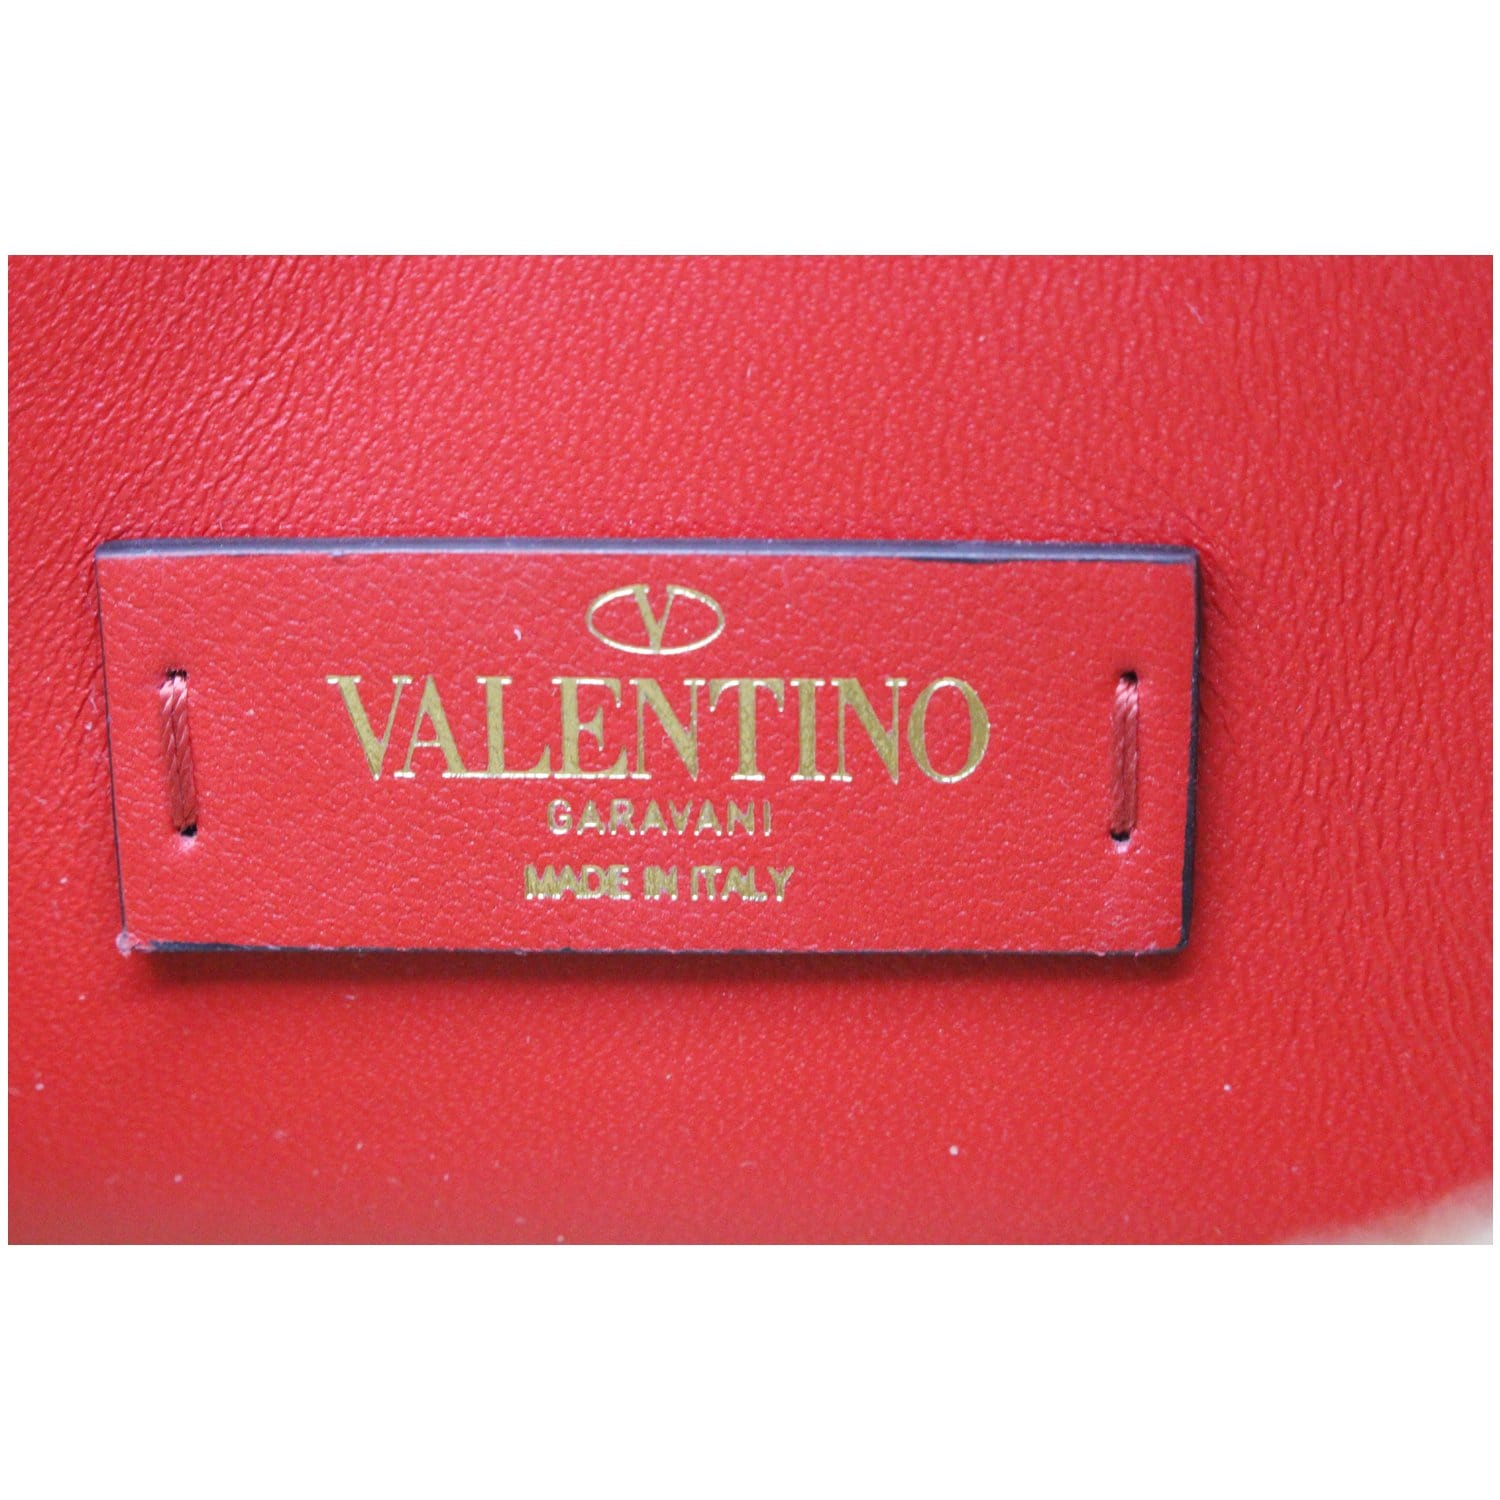 Valentino Red Valentino Garavani Rockstud Camera Bag Valentino Garavani